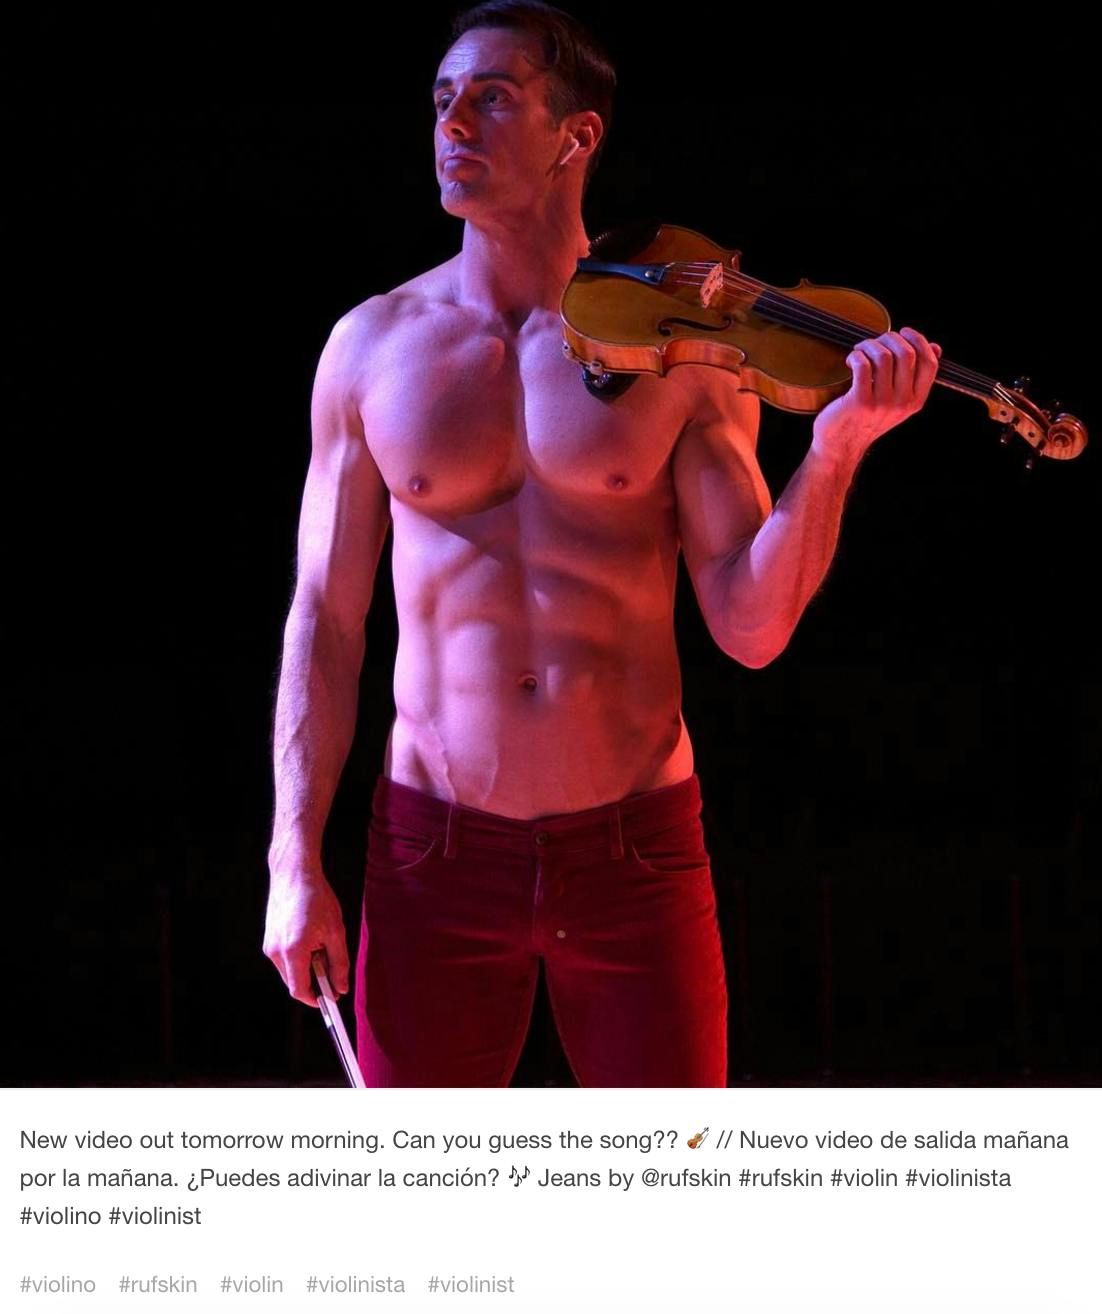 gay tumblr : the shirtless violinist